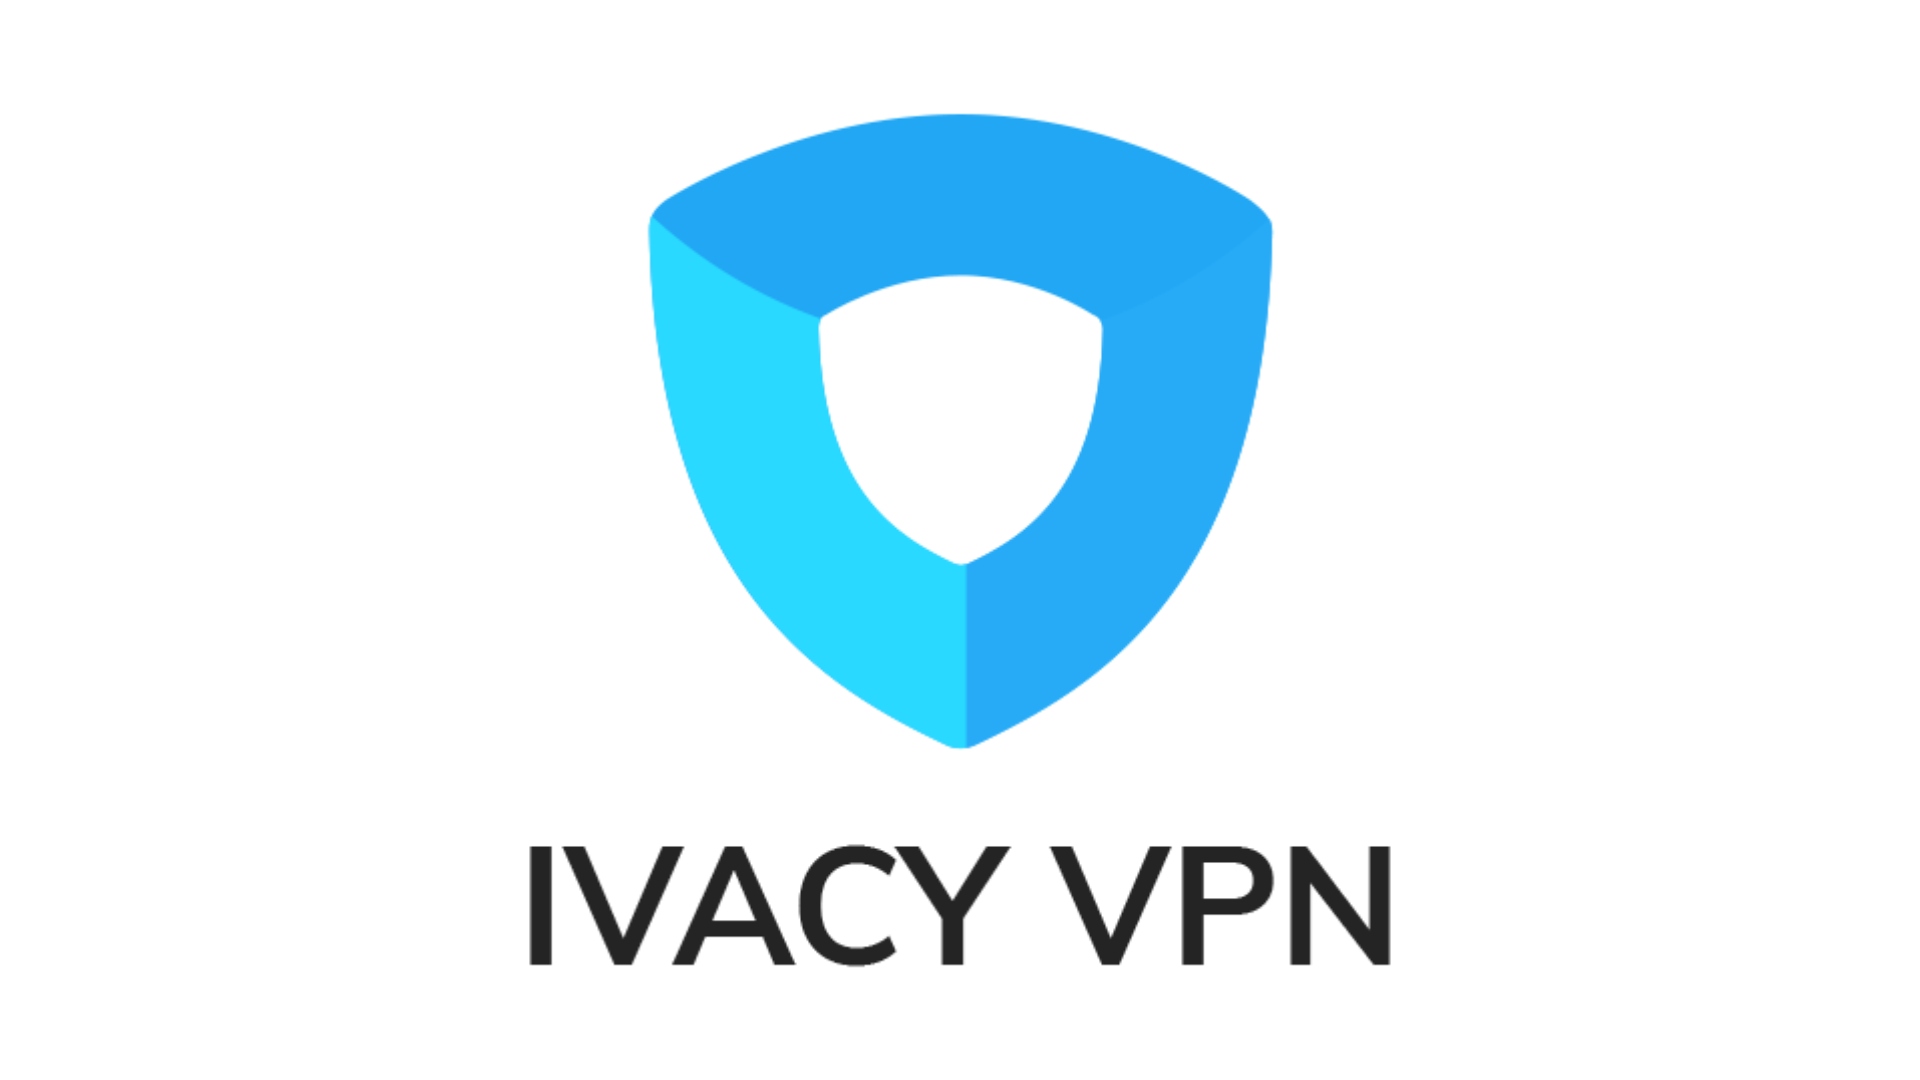 Best GTA Online VPN: Ivacy VPN. Image shows the company logo.